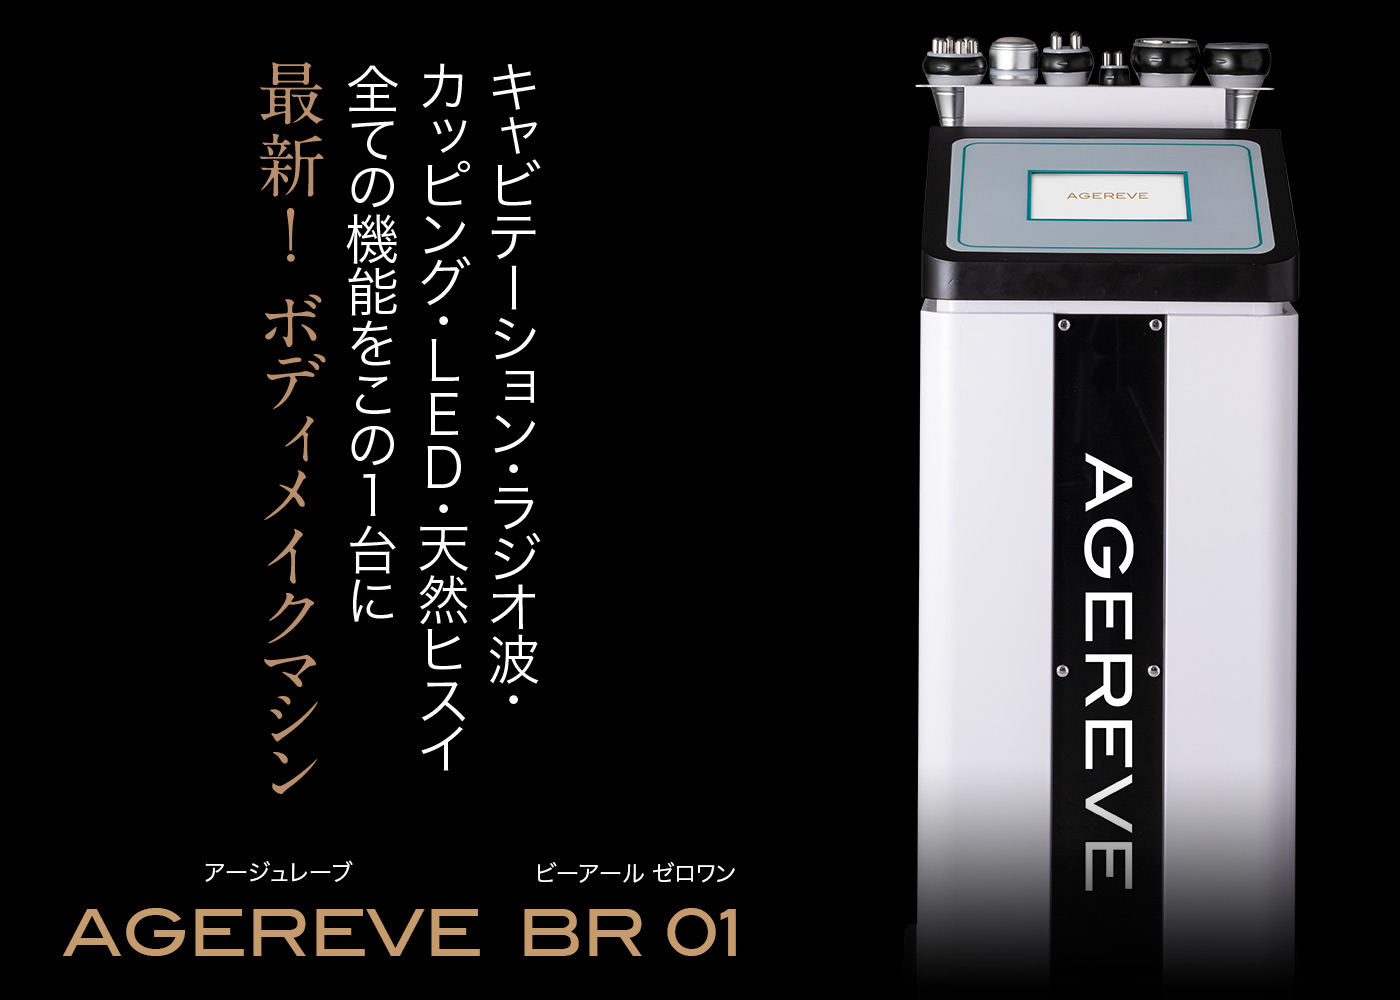 AGEREVE-アージュレーブ-最先端のサロン美容機器